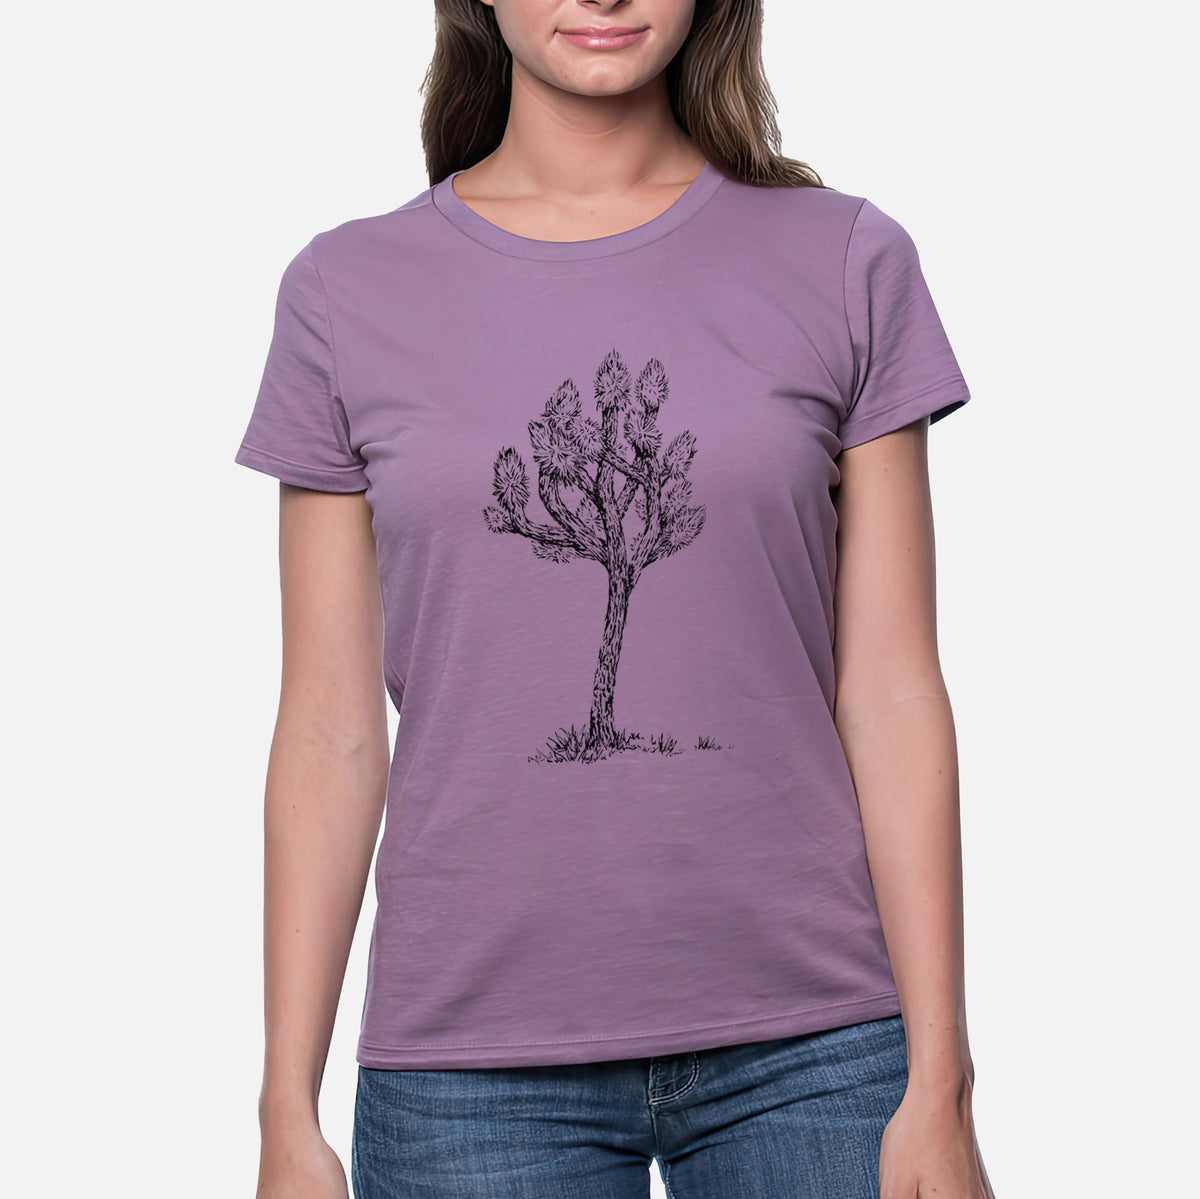 Yucca brevifolia - Joshua Tree - Women&#39;s Crewneck - Made in USA - 100% Organic Cotton